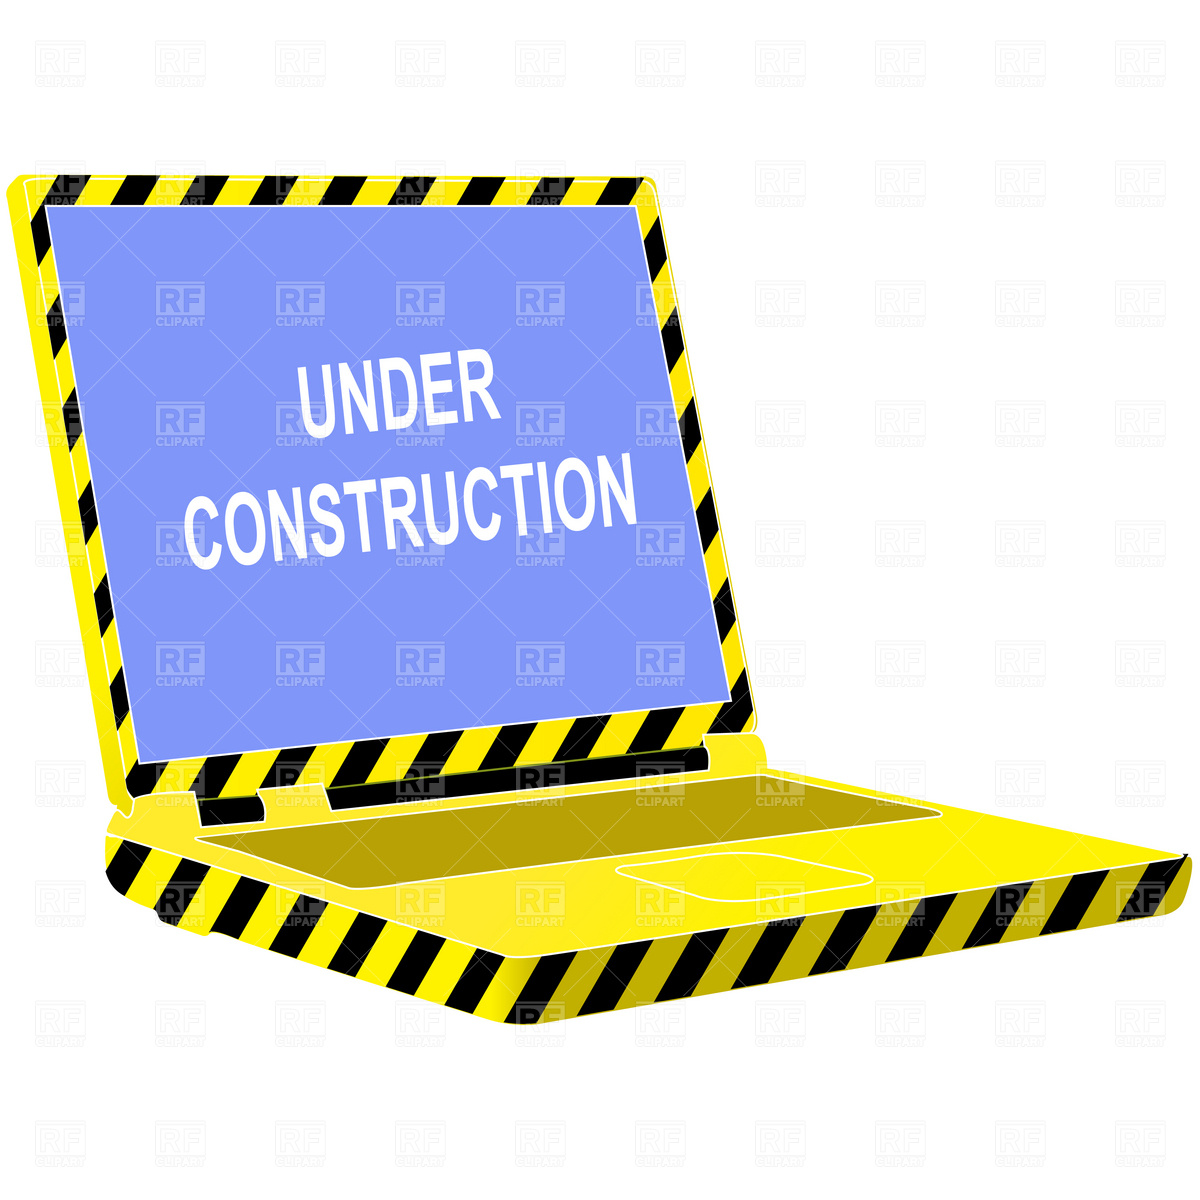 Under Construction Clip Art Free Download